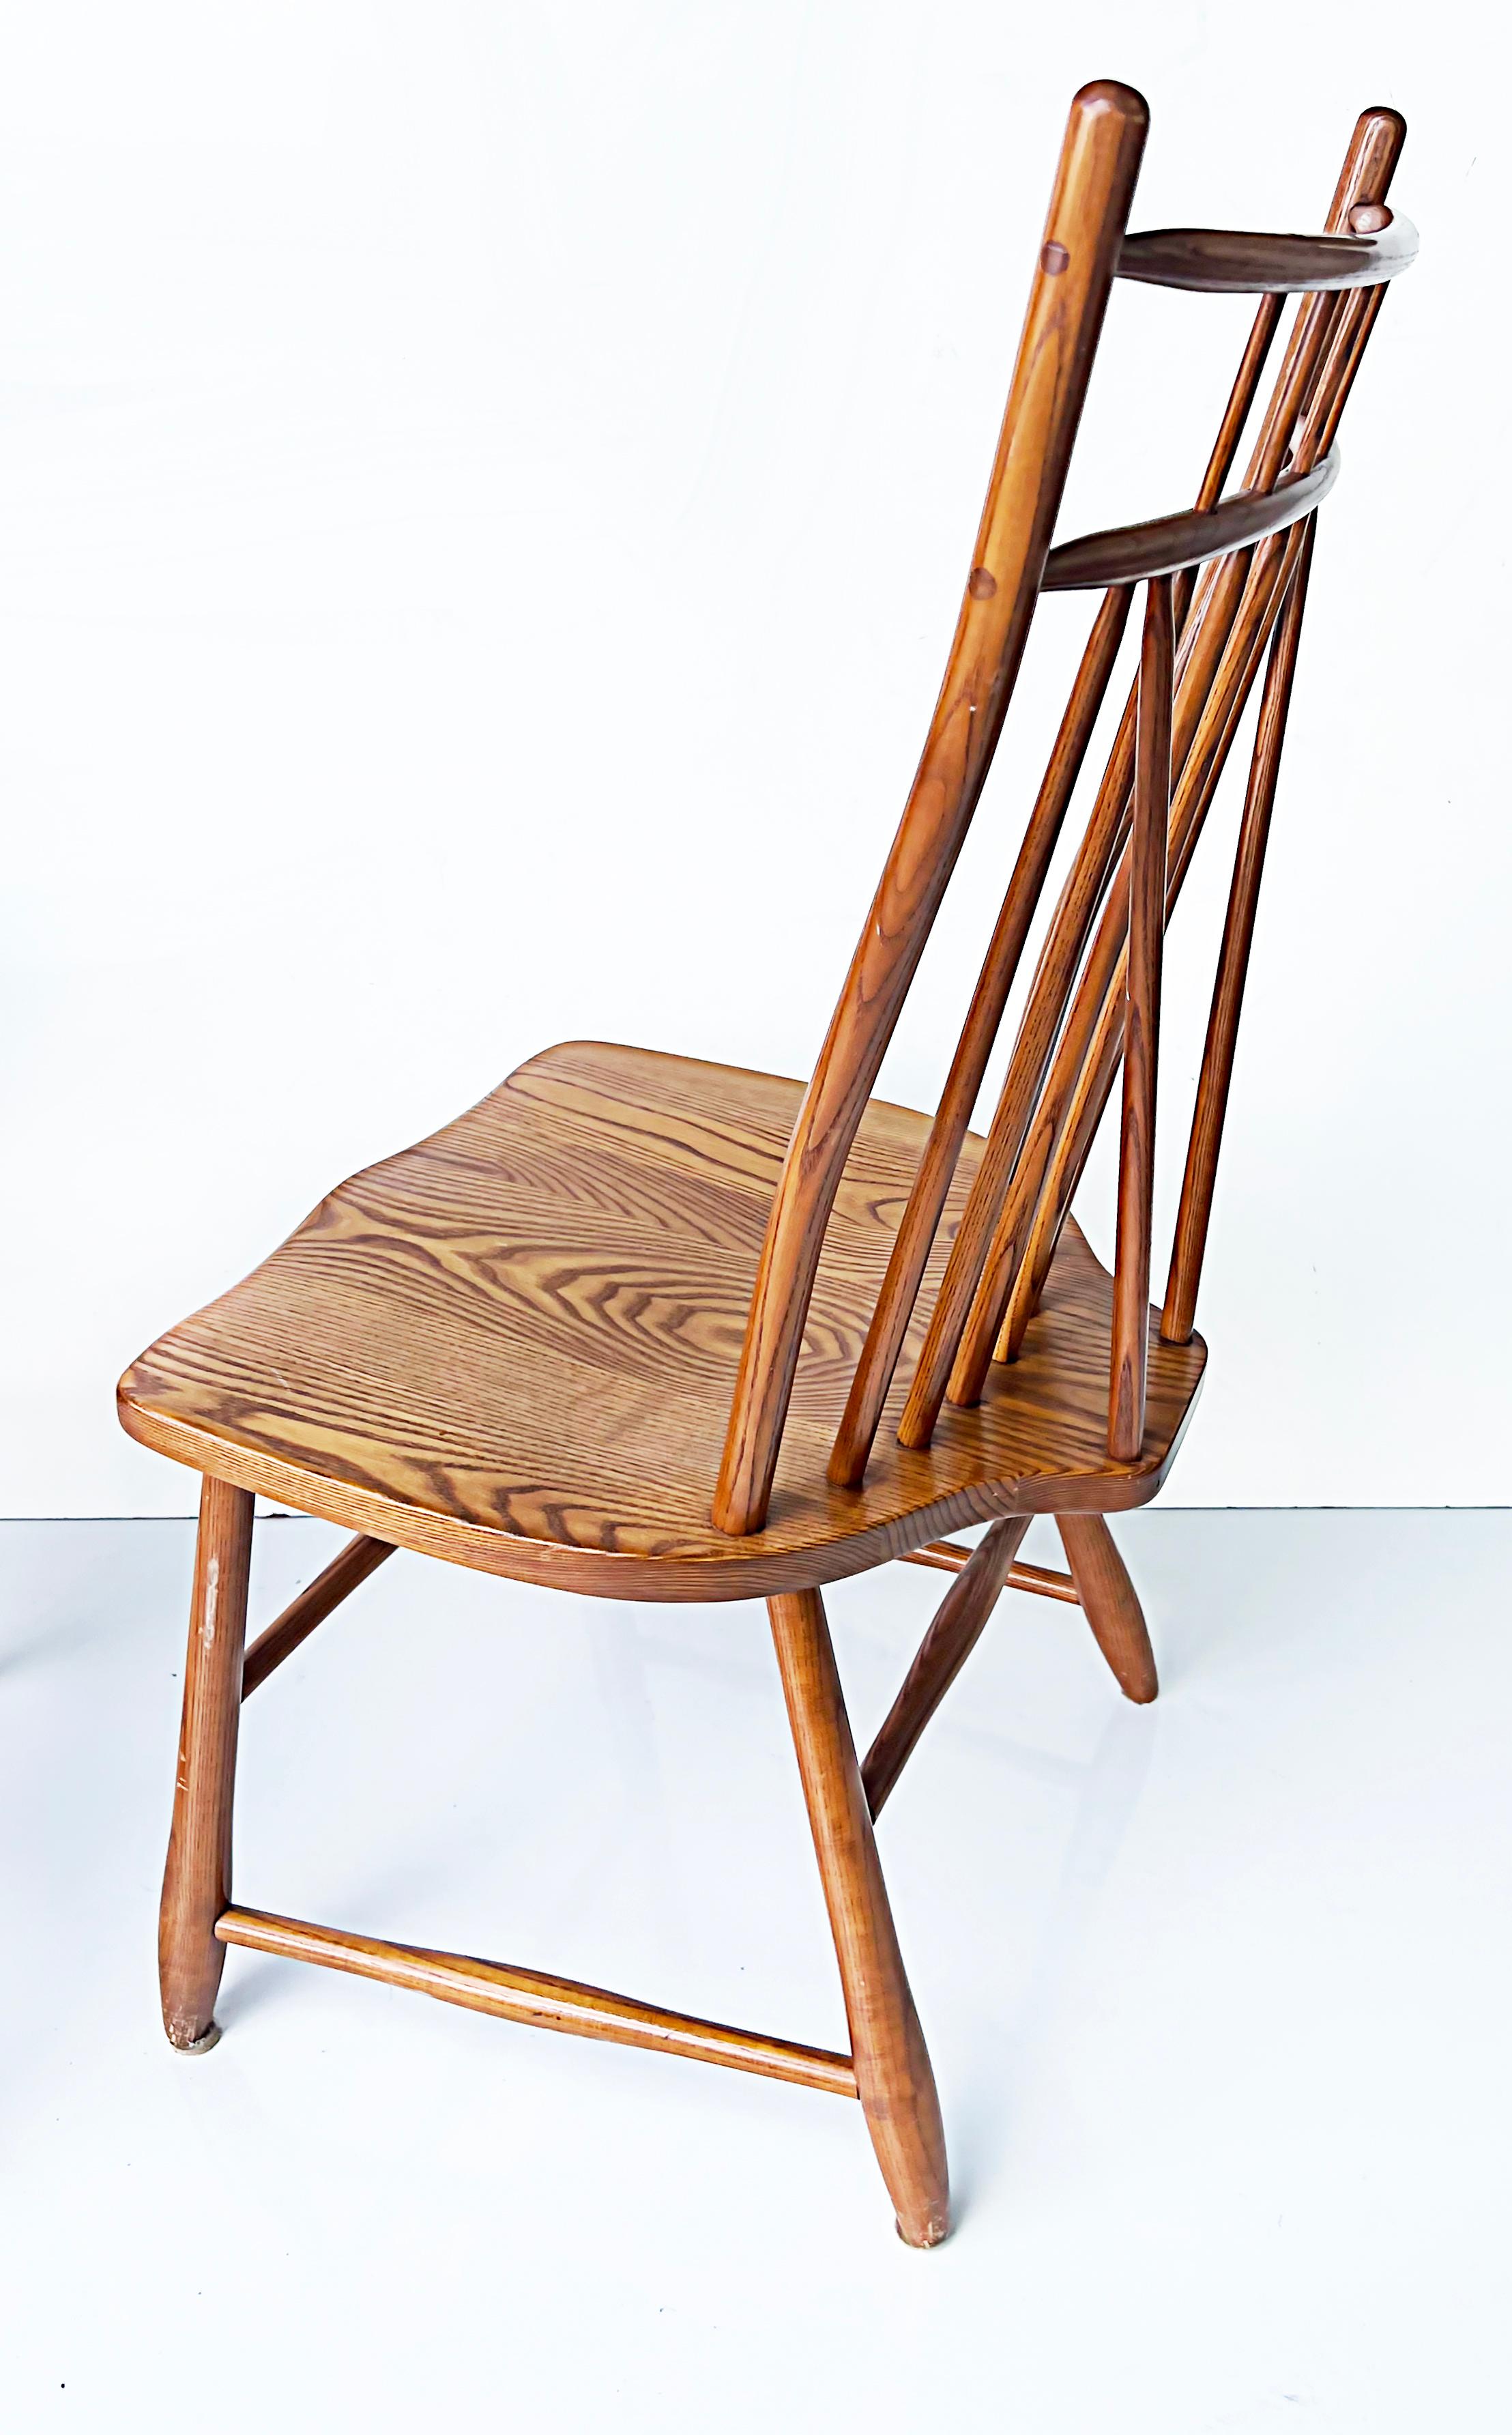 Ash S Bent Bros. Vintage Modern Windsor Chairs, Set of 6, 1960s